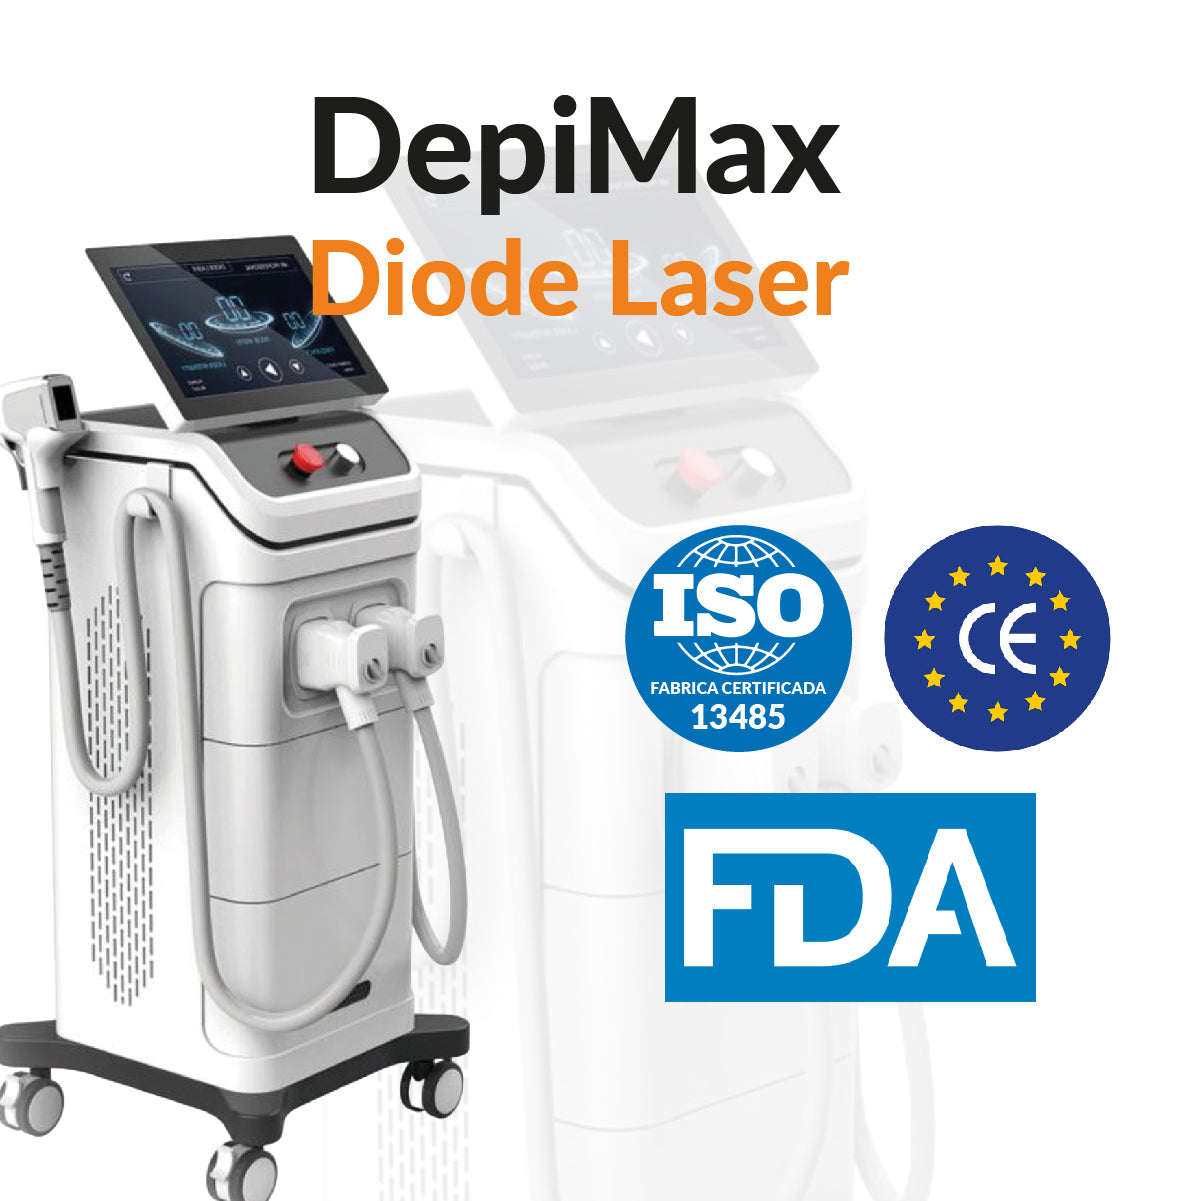 DepiMax Diode Laser